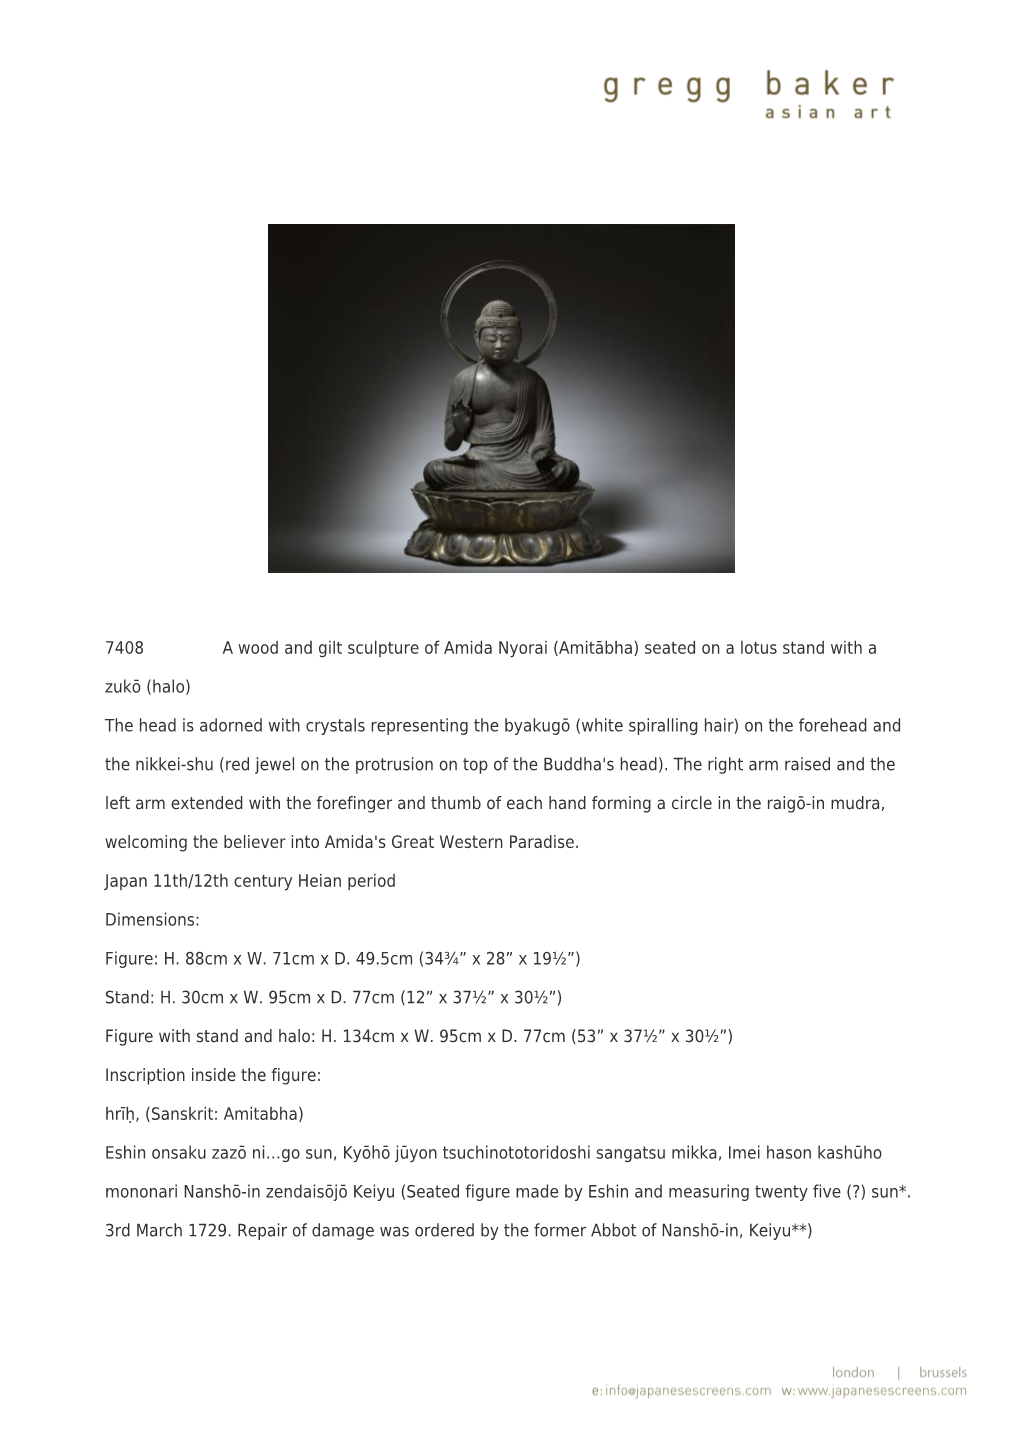 7408 a Wood and Gilt Sculpture of Amida Nyorai (Amitābha) Seated on a Lotus Stand with a Zukō (Halo)